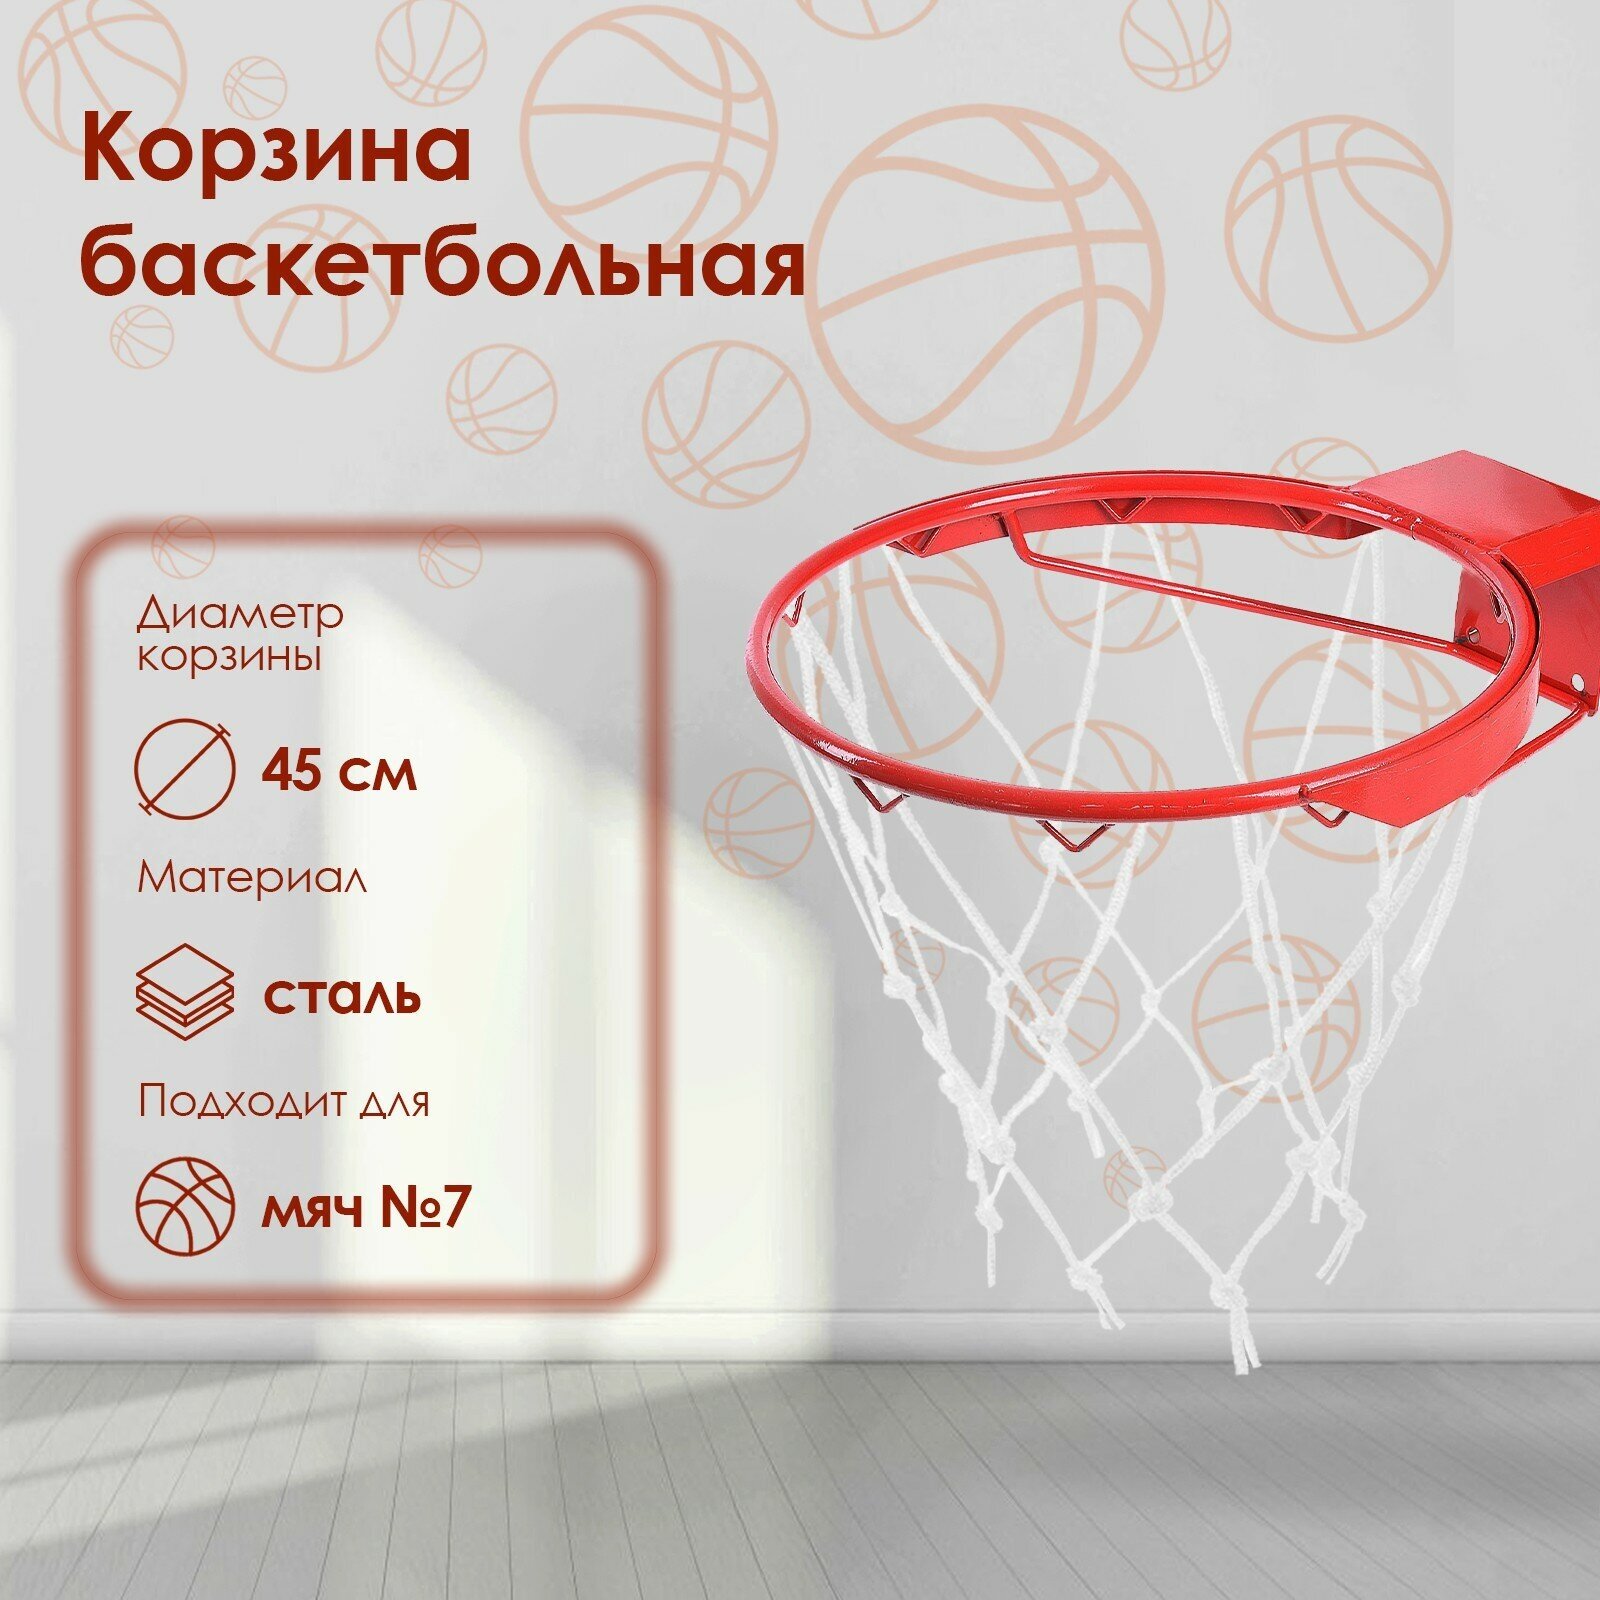 Корзина баскетбольная №7, диаметр 450 мм, антивандальная